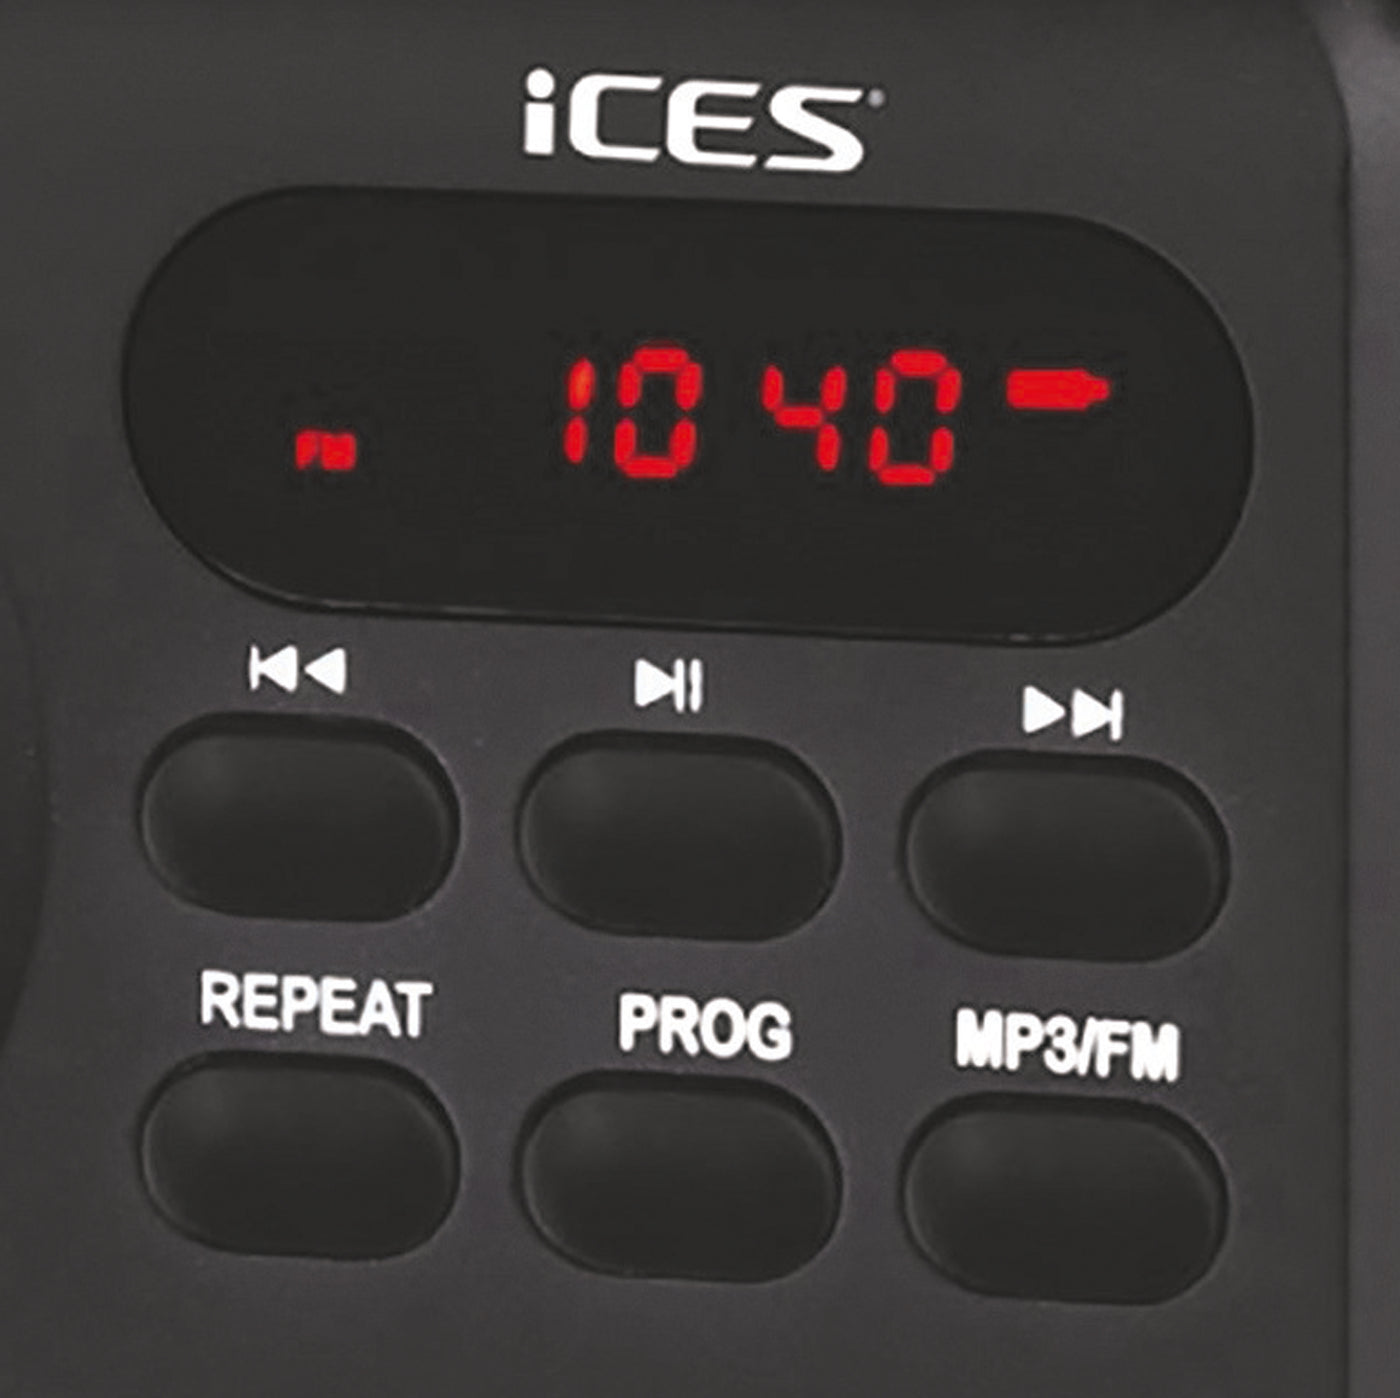 Ices IMPR-112 Black - Portable radio PLL FM, USB, SD